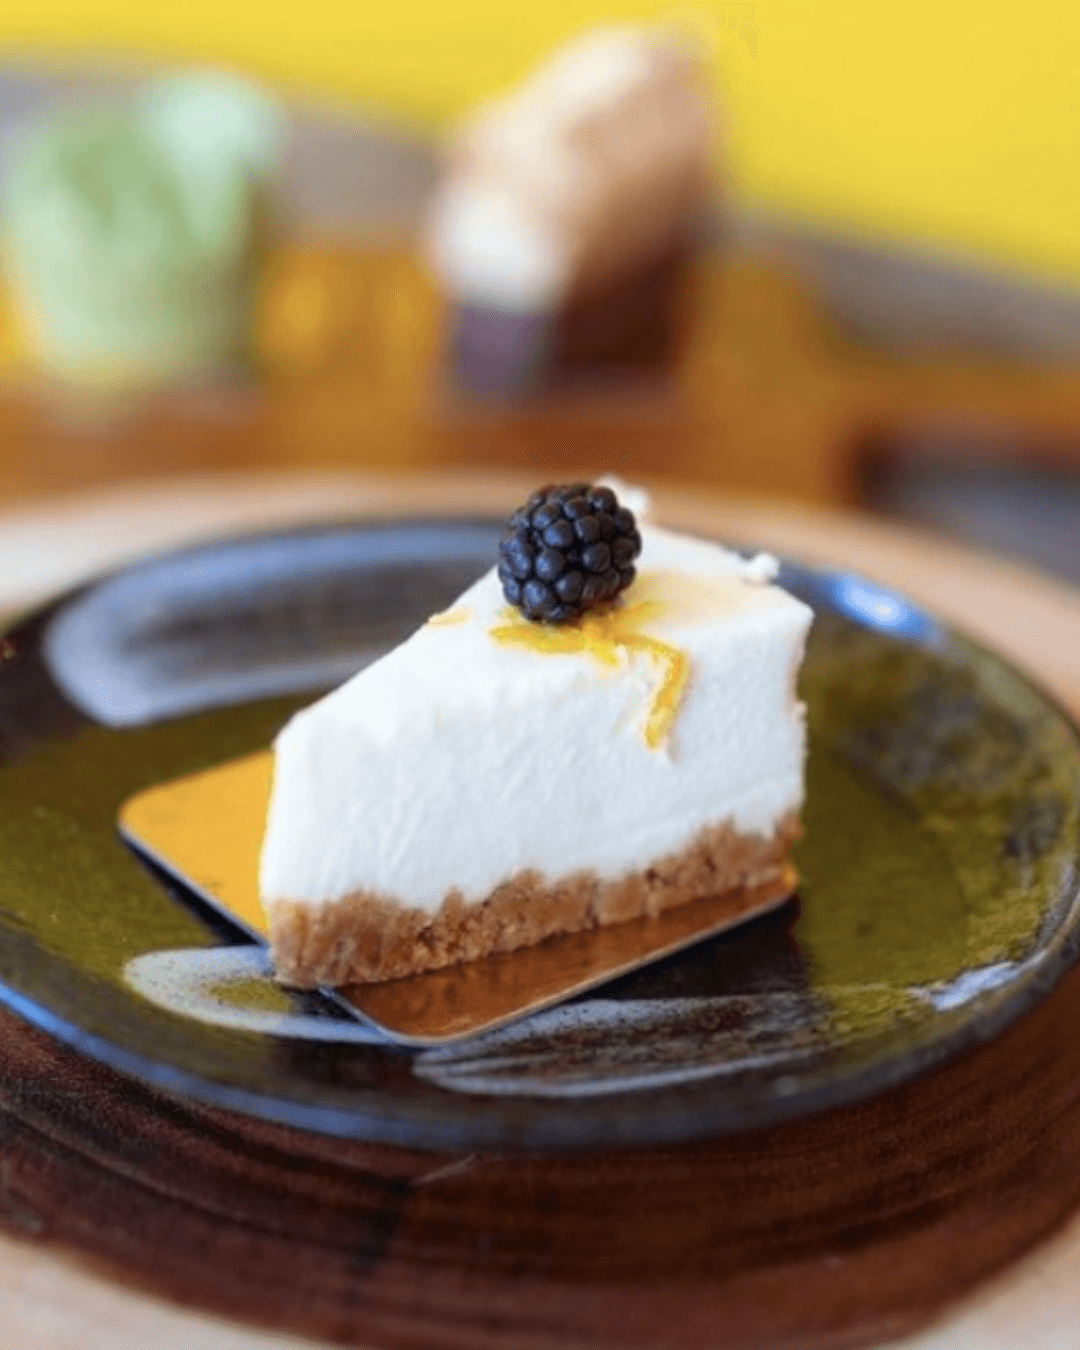 Yuzu Cheesecake - Broyé Cafe & Bakery